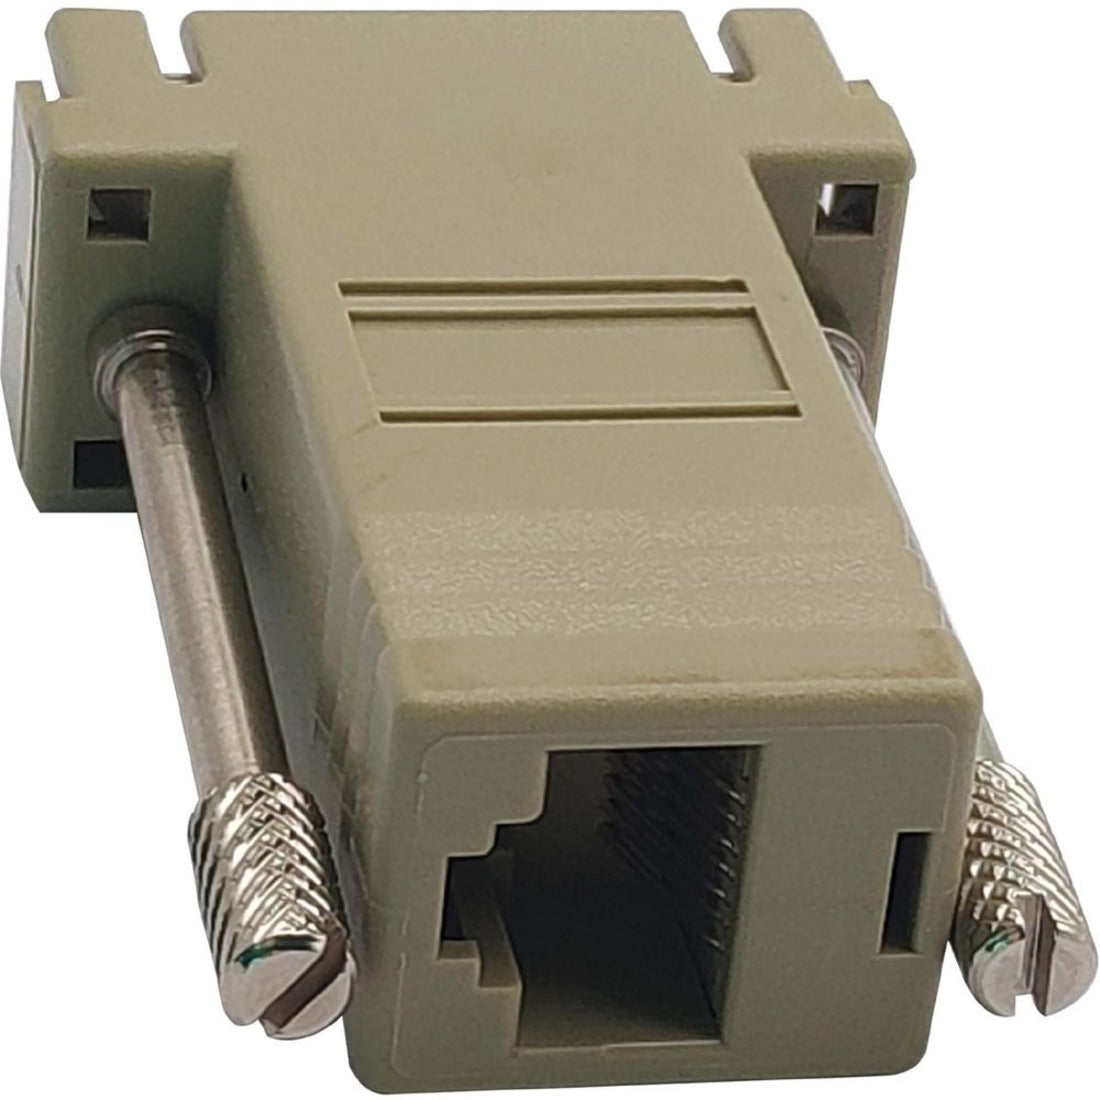 Tripp Lite B090-A9F Modular Adapter, Data Transfer Adapter for Console Servers